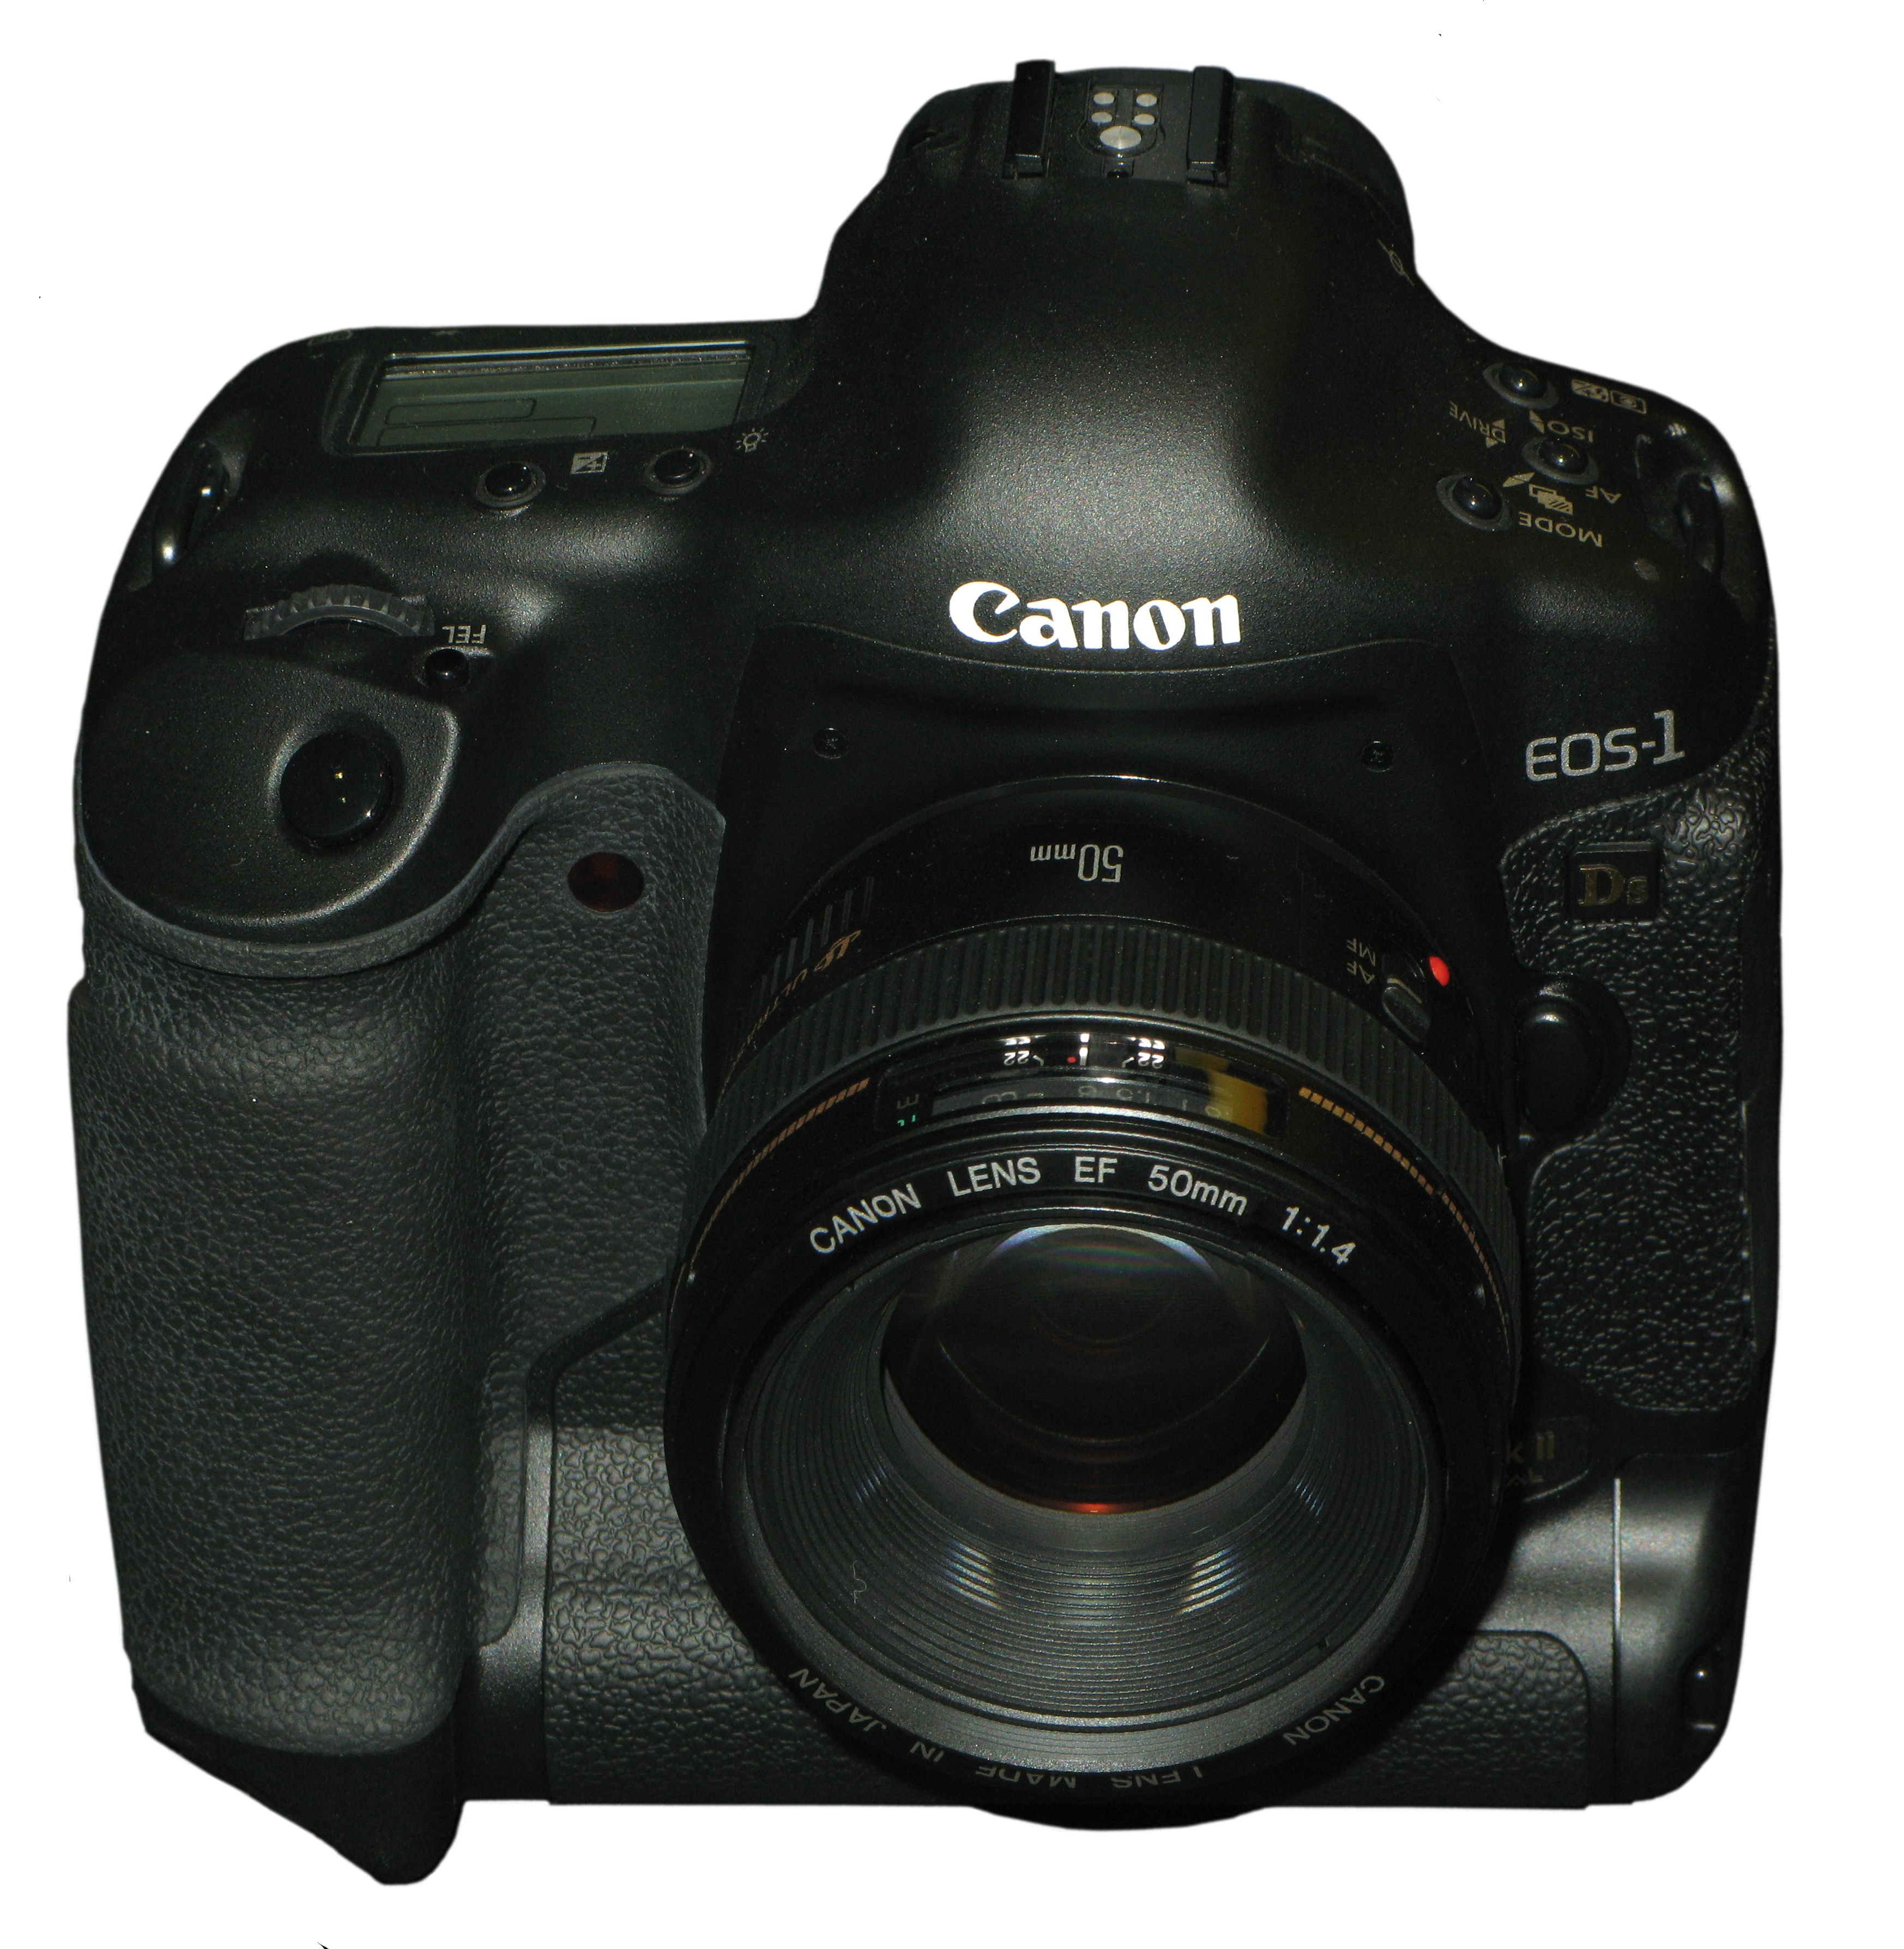 Canon EOS-1ds